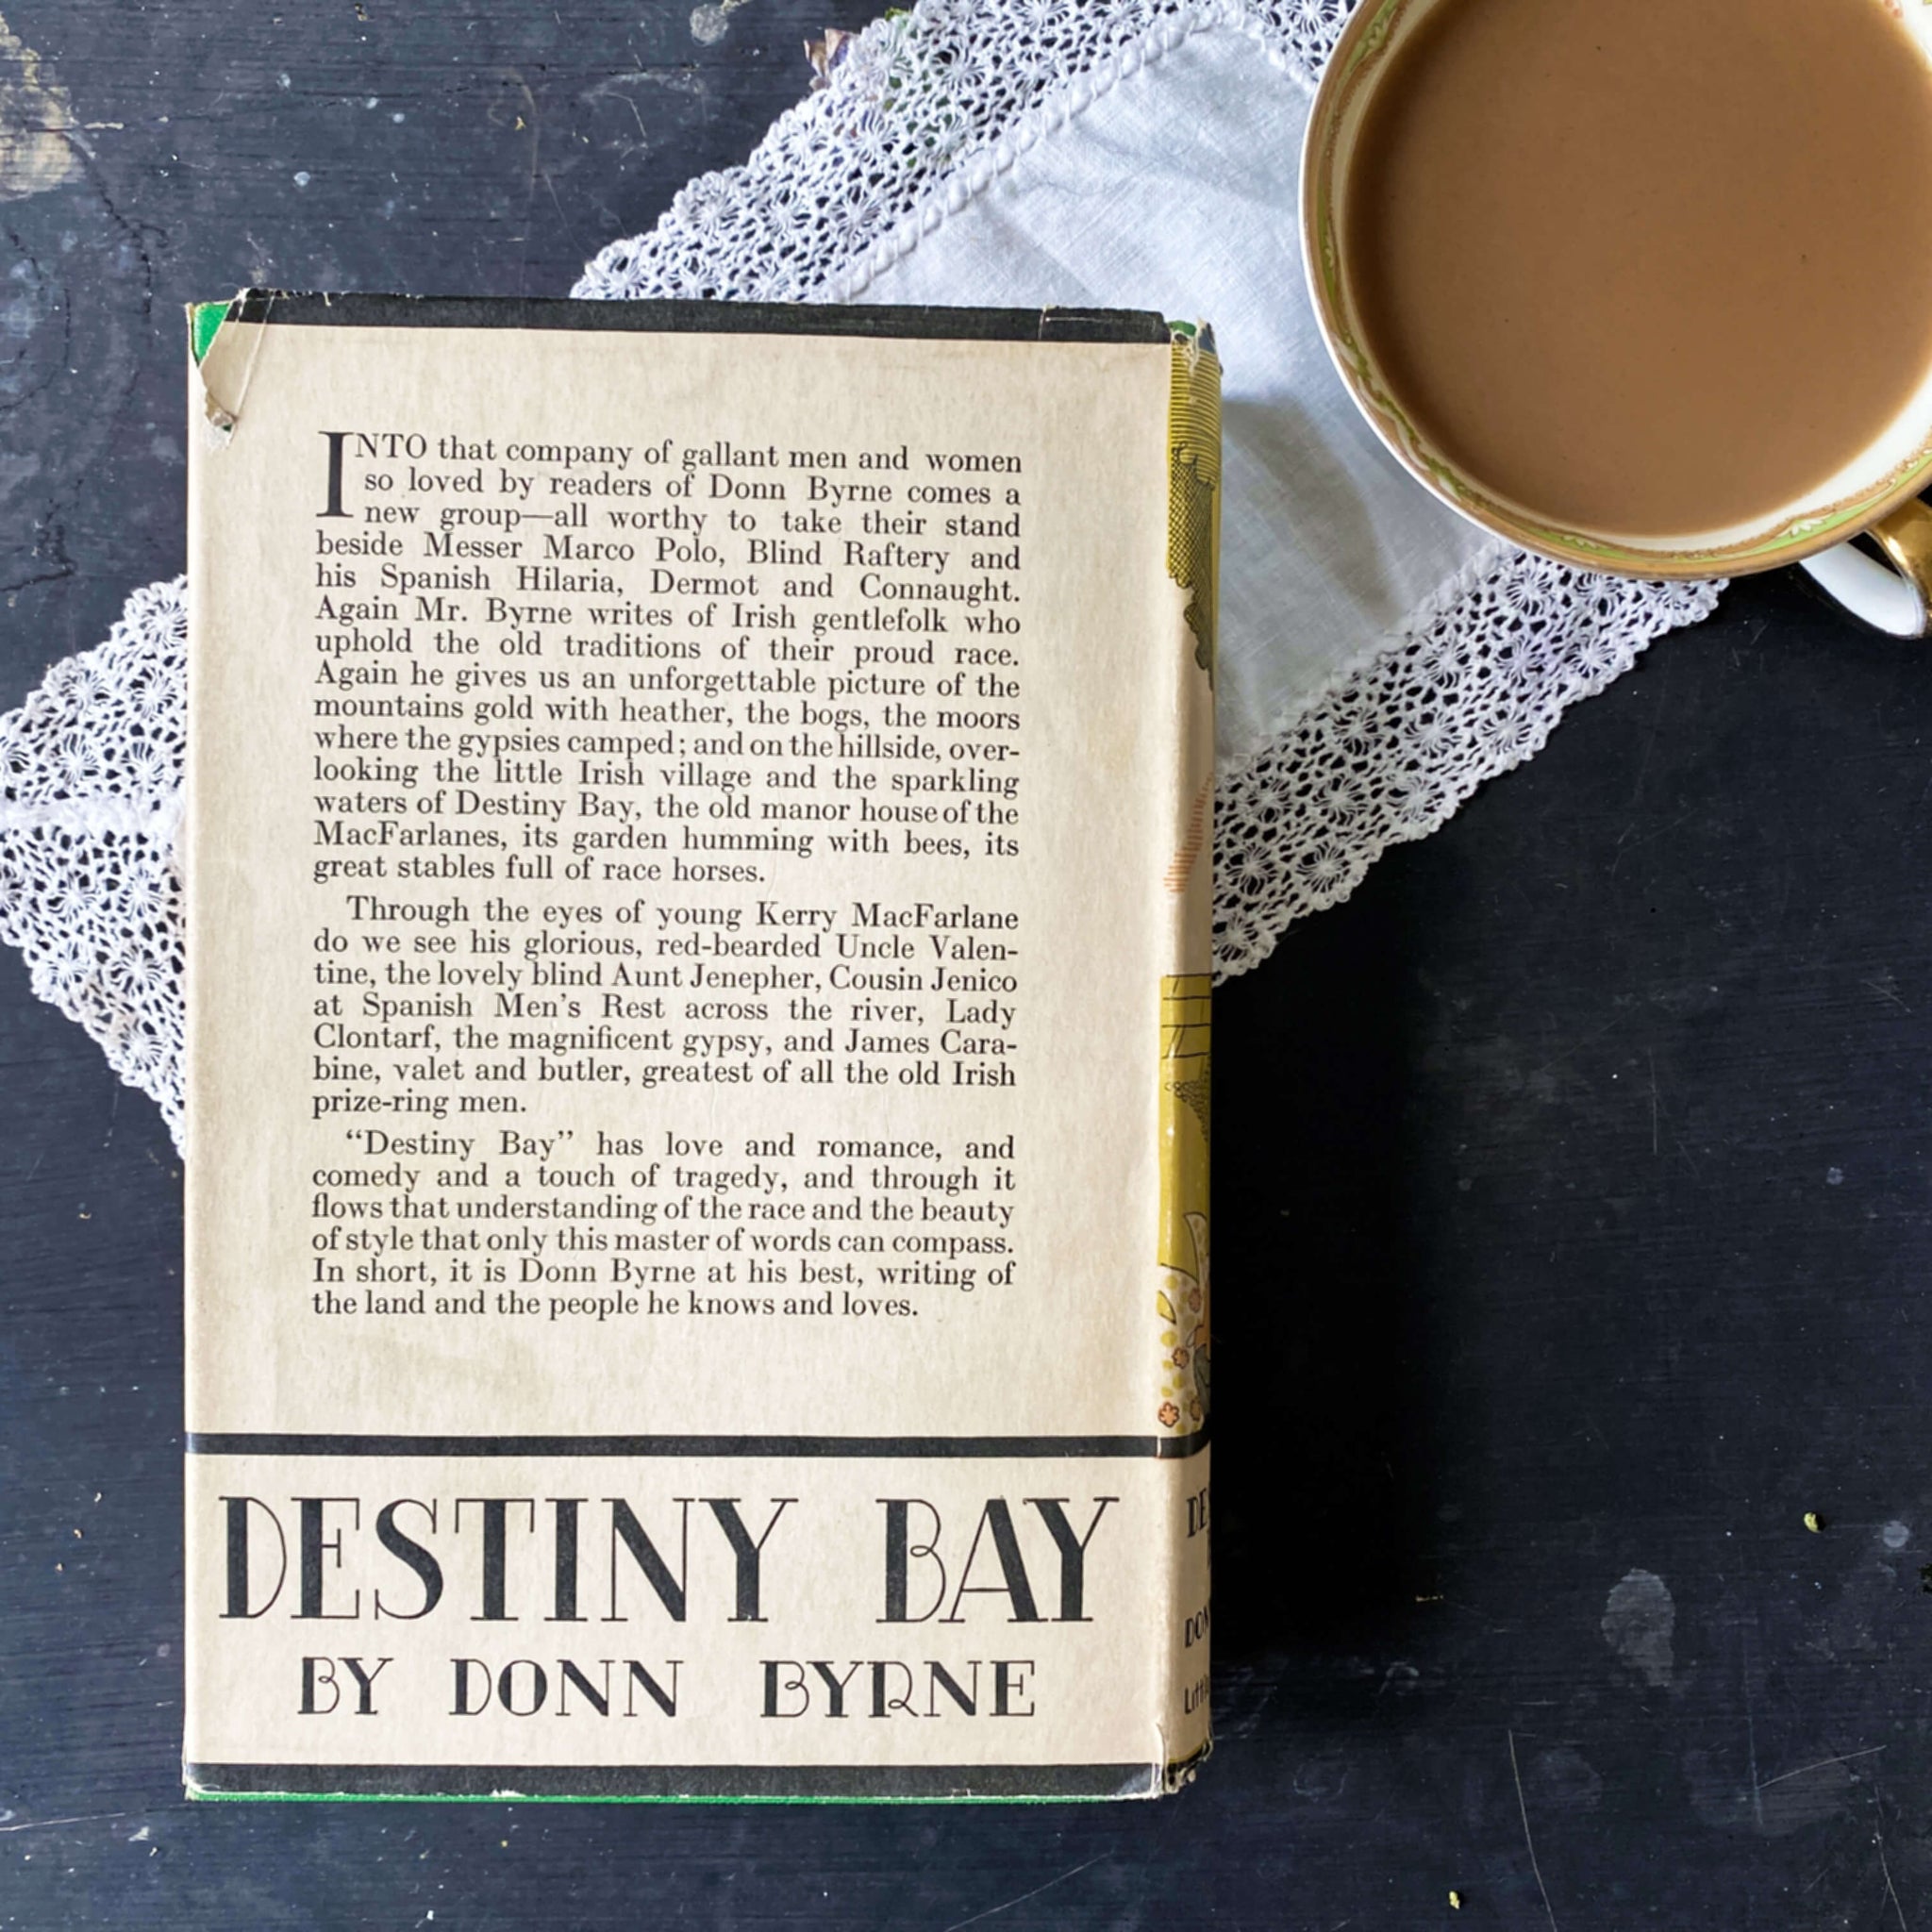 1940's Irish Novel - Destiny Bay by Donn Byrne - 1941 Edition